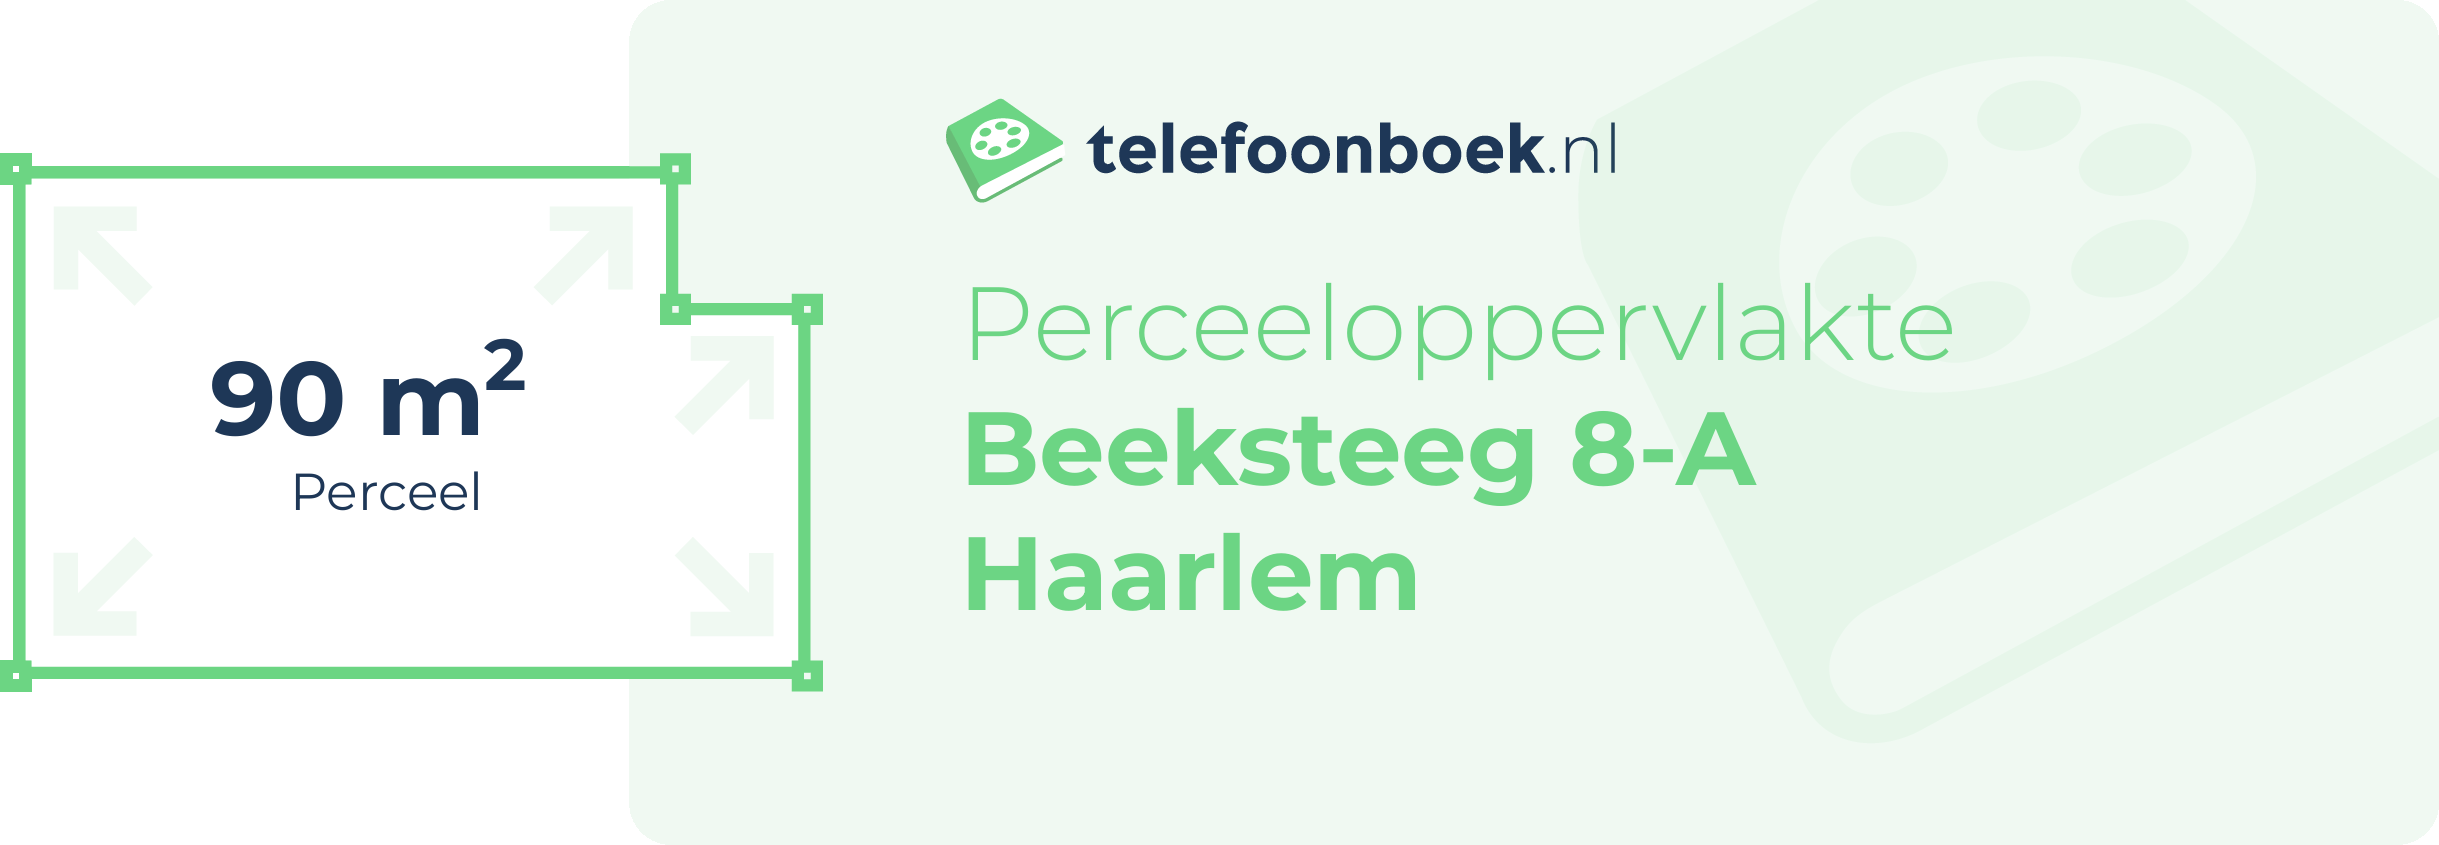 Perceeloppervlakte Beeksteeg 8-A Haarlem